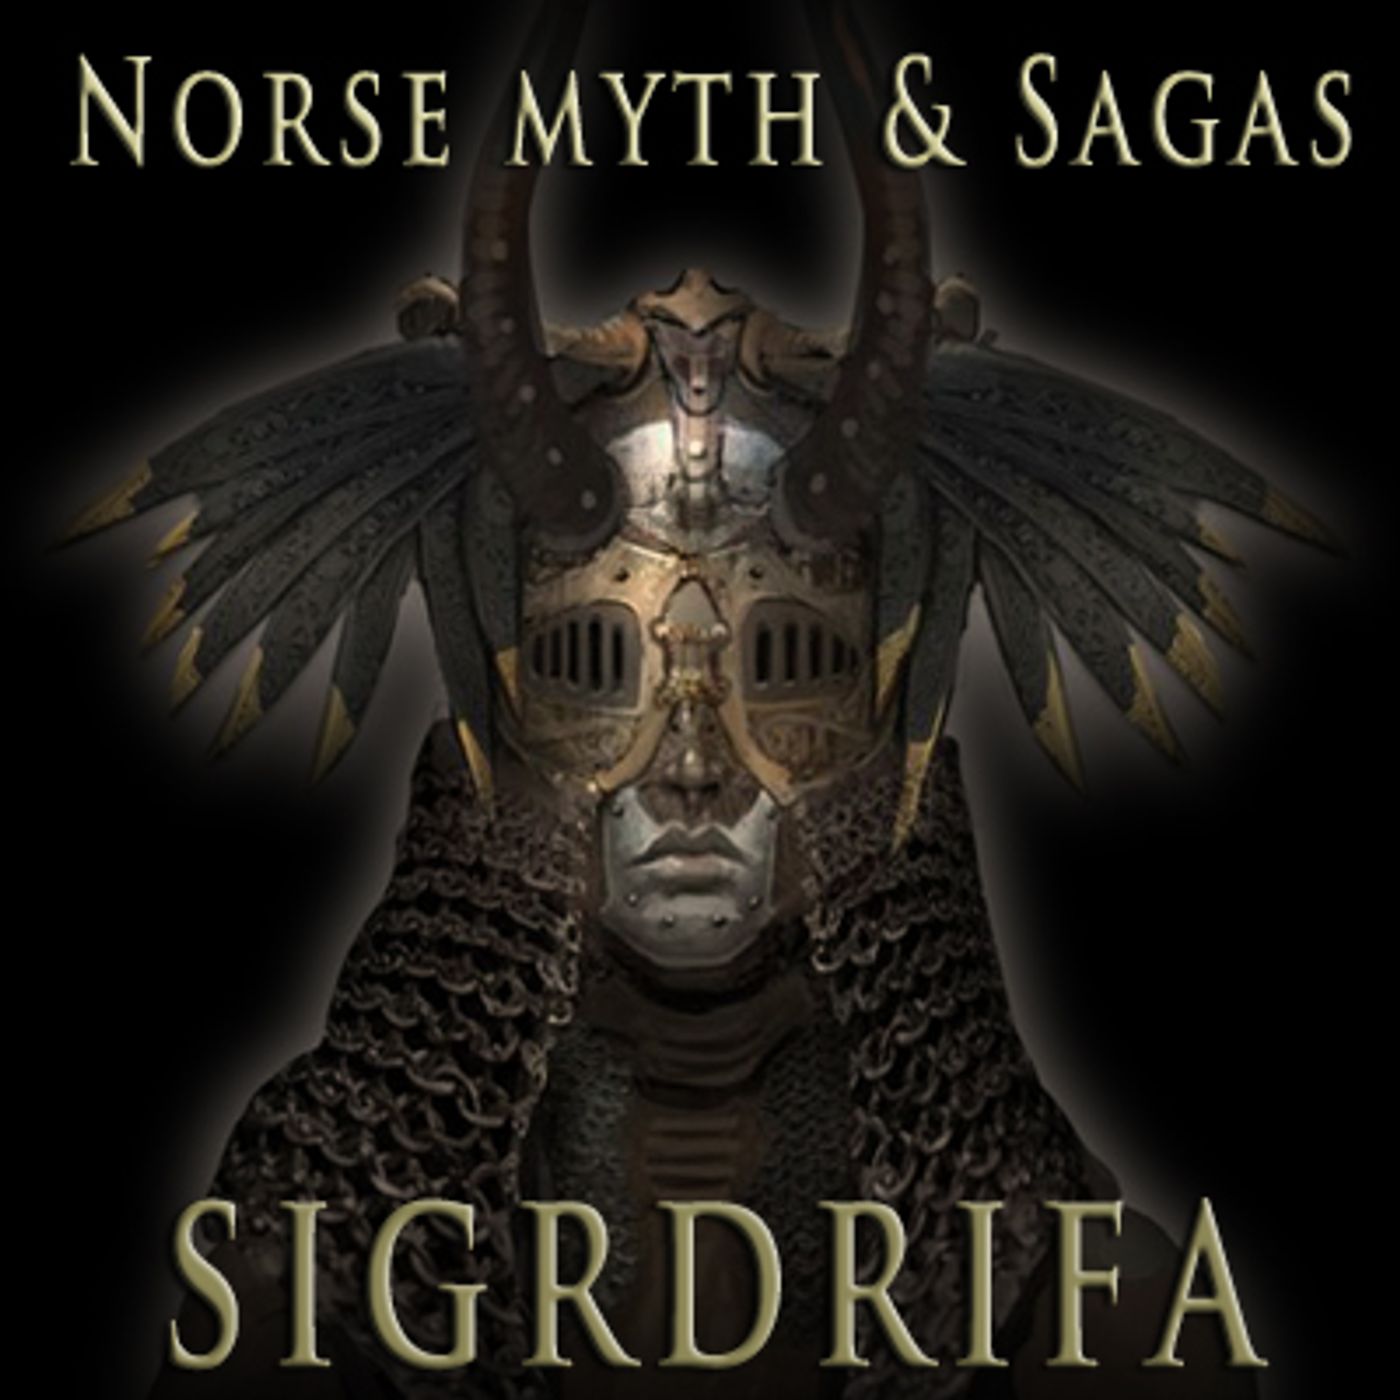 Norse myth & sagas with Sigrdrifa